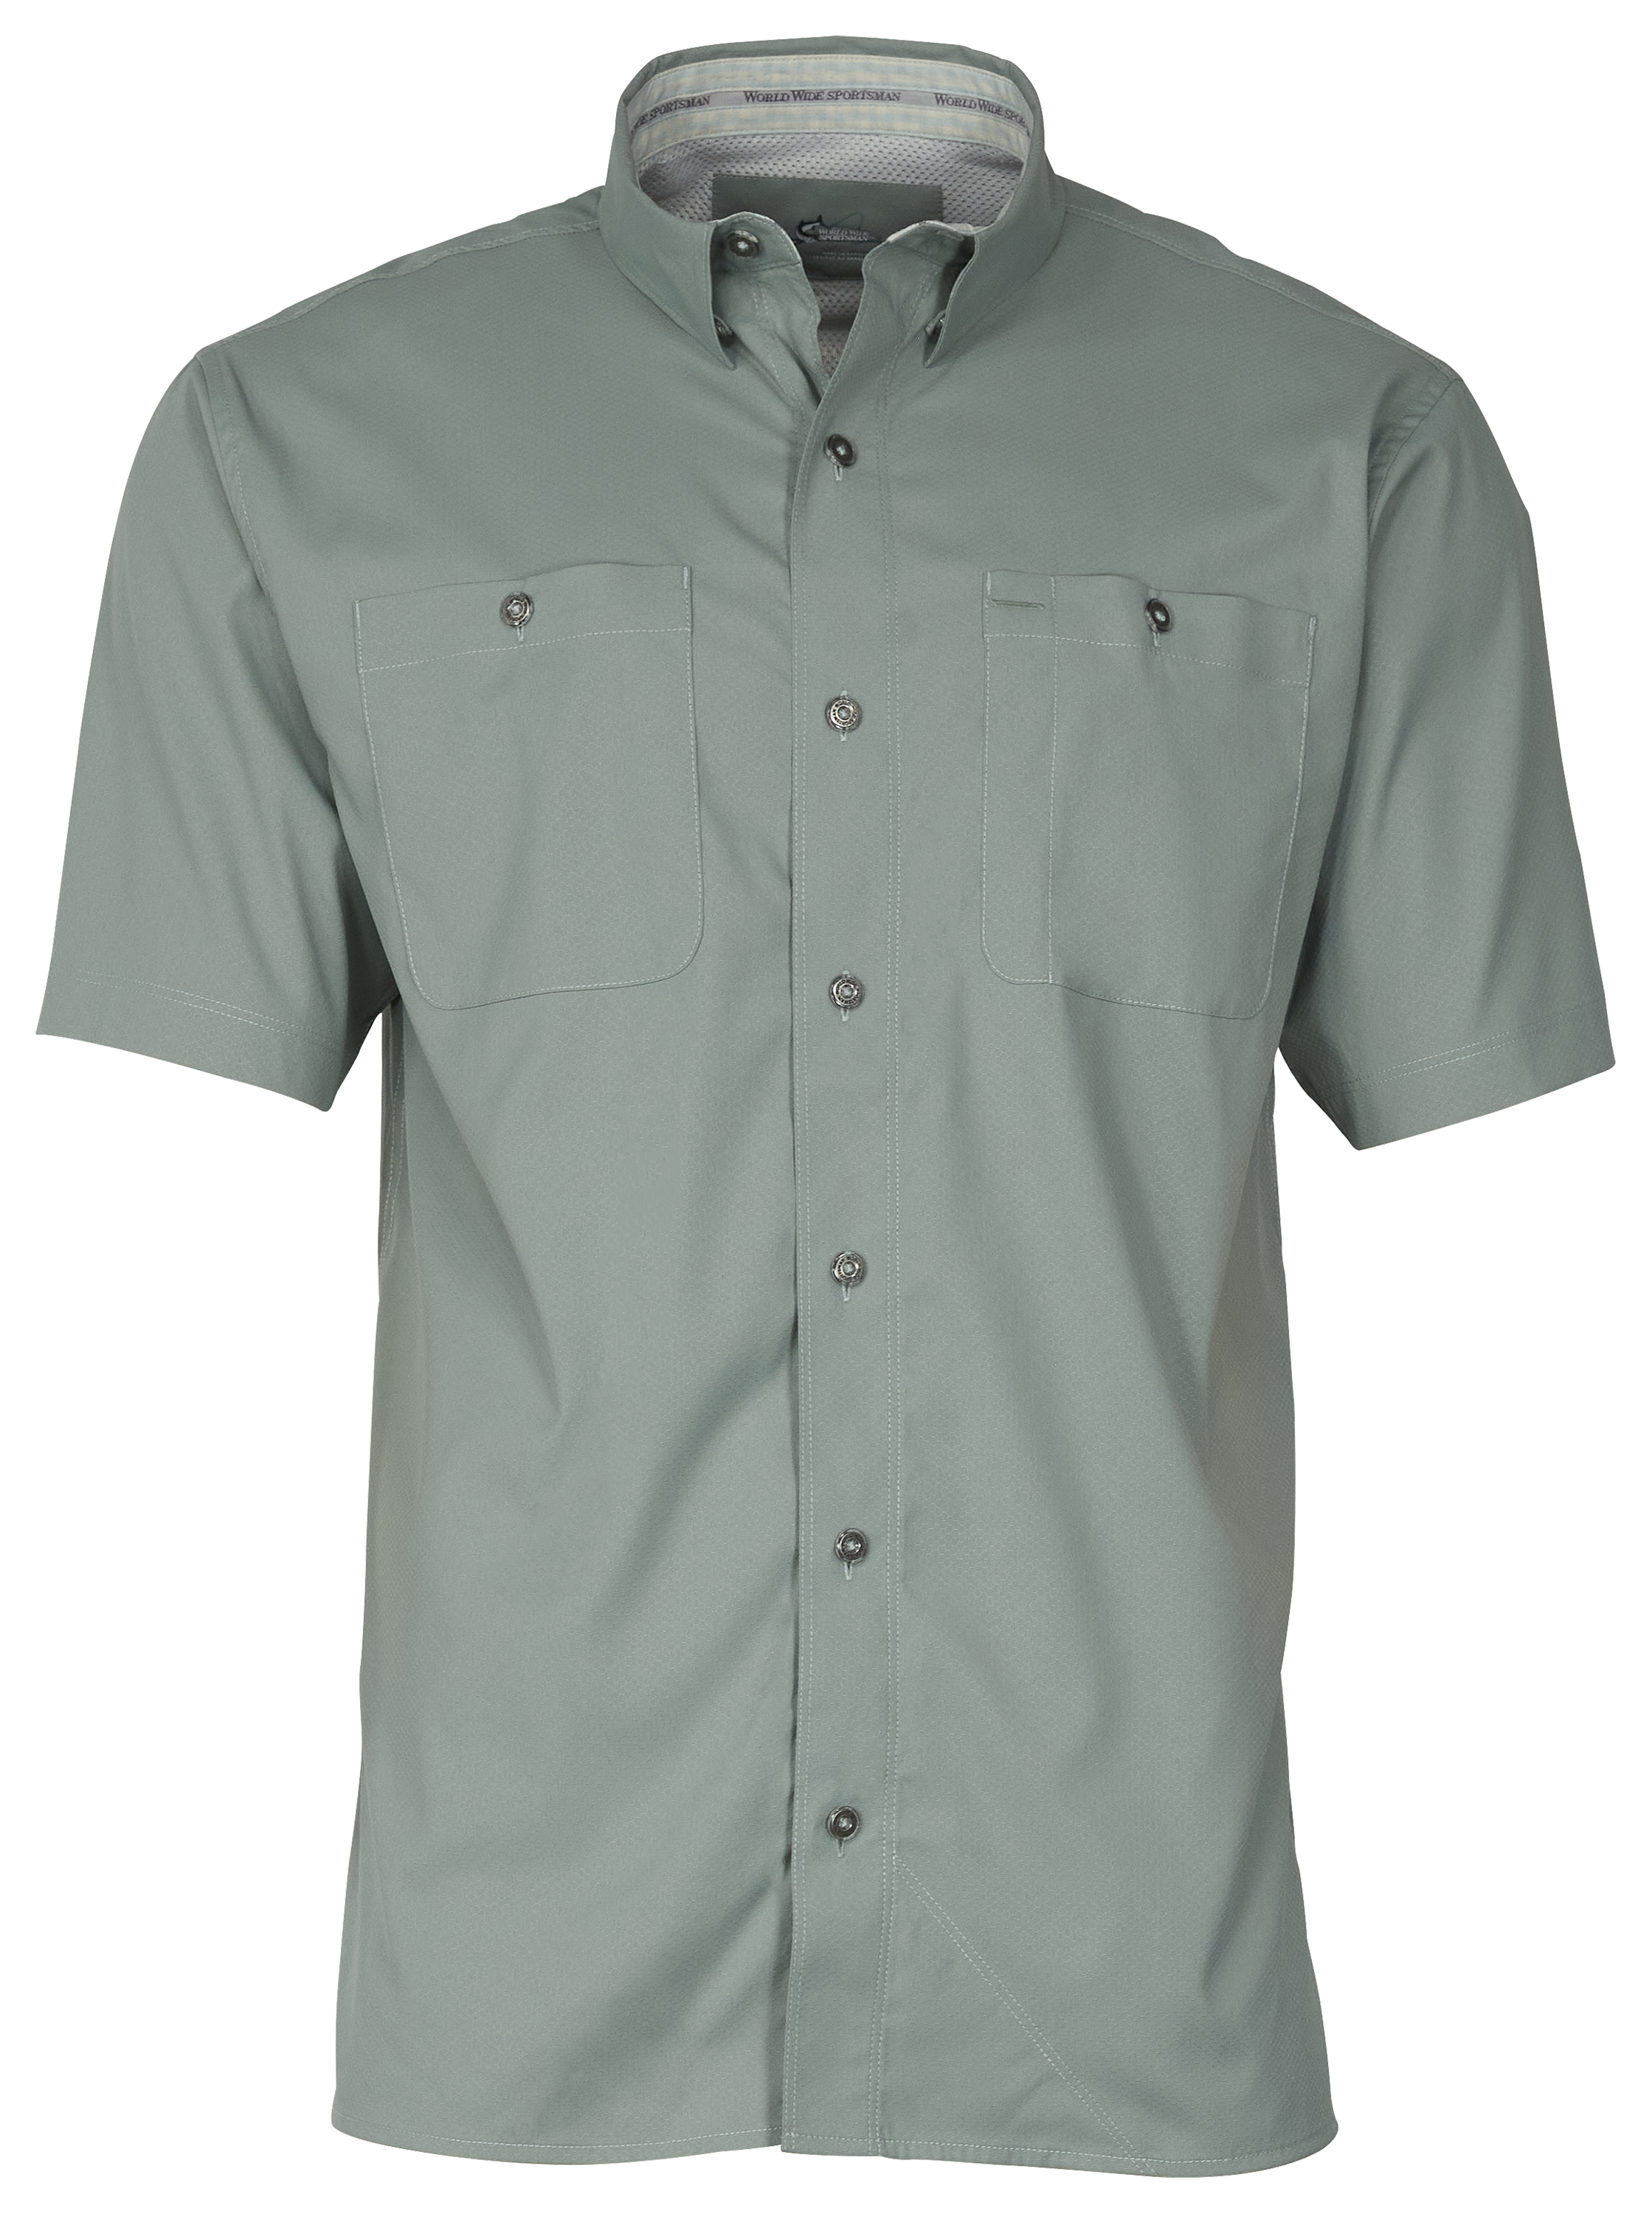 World Wide Sportsman Ultimate Angler Solid Short-Sleeve Shirt for Men - Iceberg Green - XL